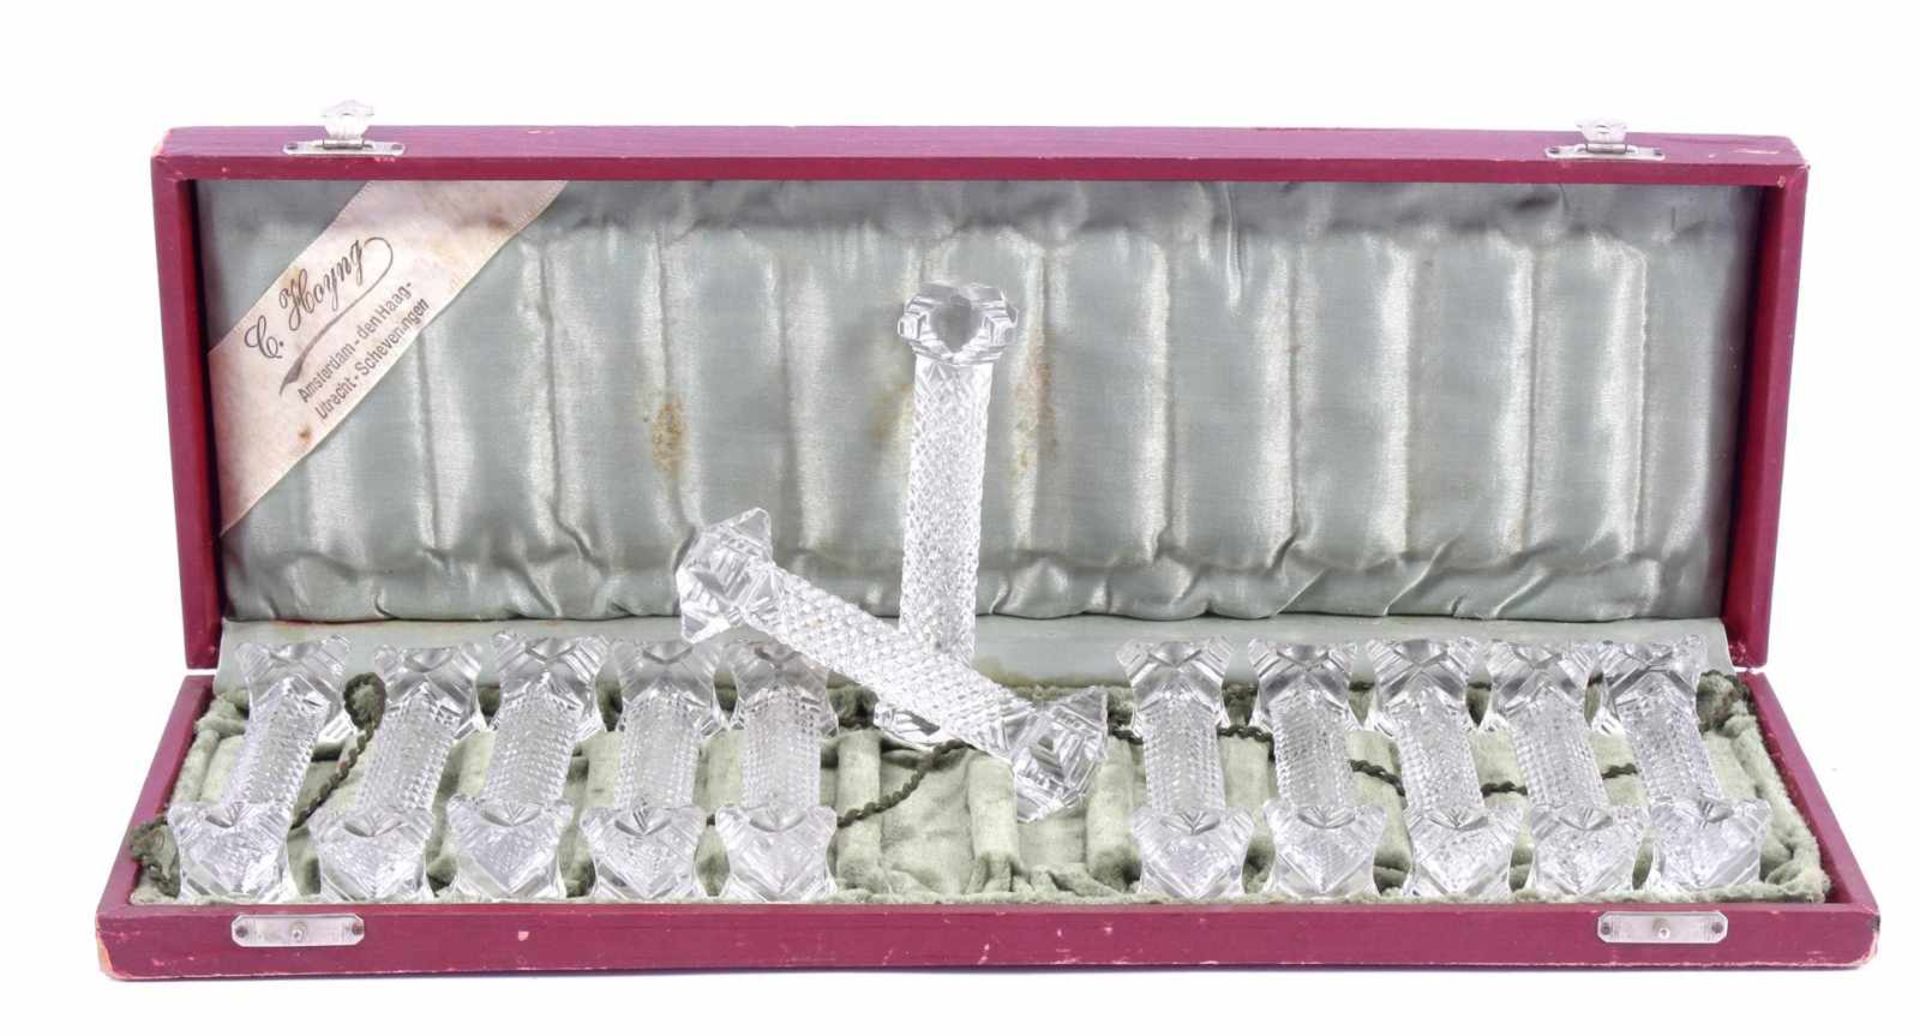 12 crystal knife rests in cassette, from Hoyng Amsterdam-The Hague-Utrecht-Scheveningen